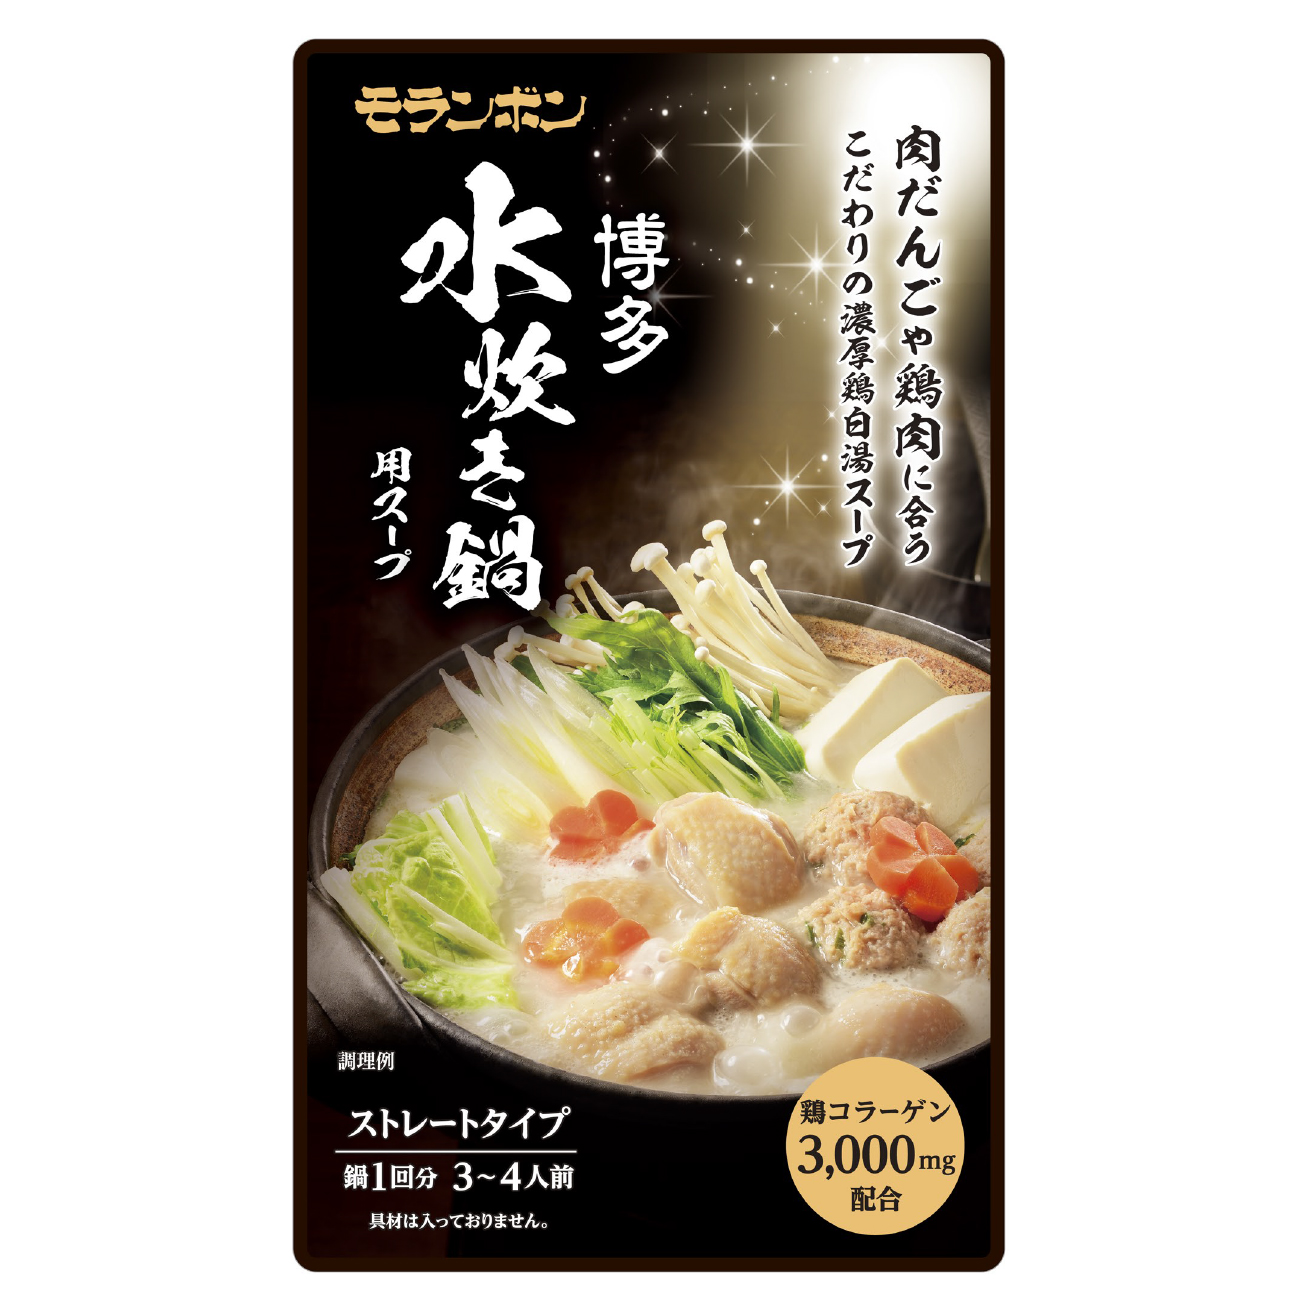 7&i 博多水炊き鍋用スープ